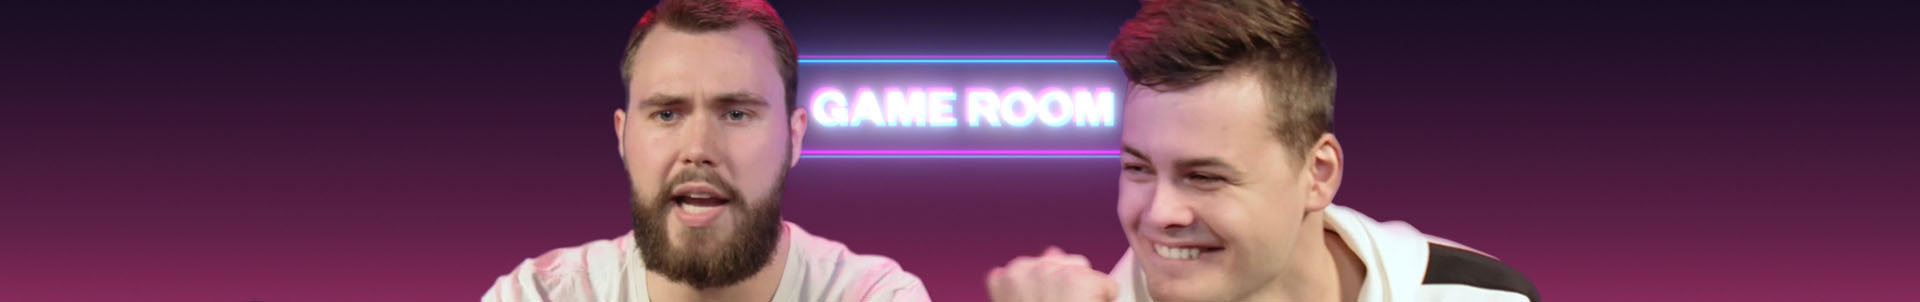 The Game Room episode 1: Mike Williams x FC Roelie | FIFA 19, Mario Kart, Gran Turismo